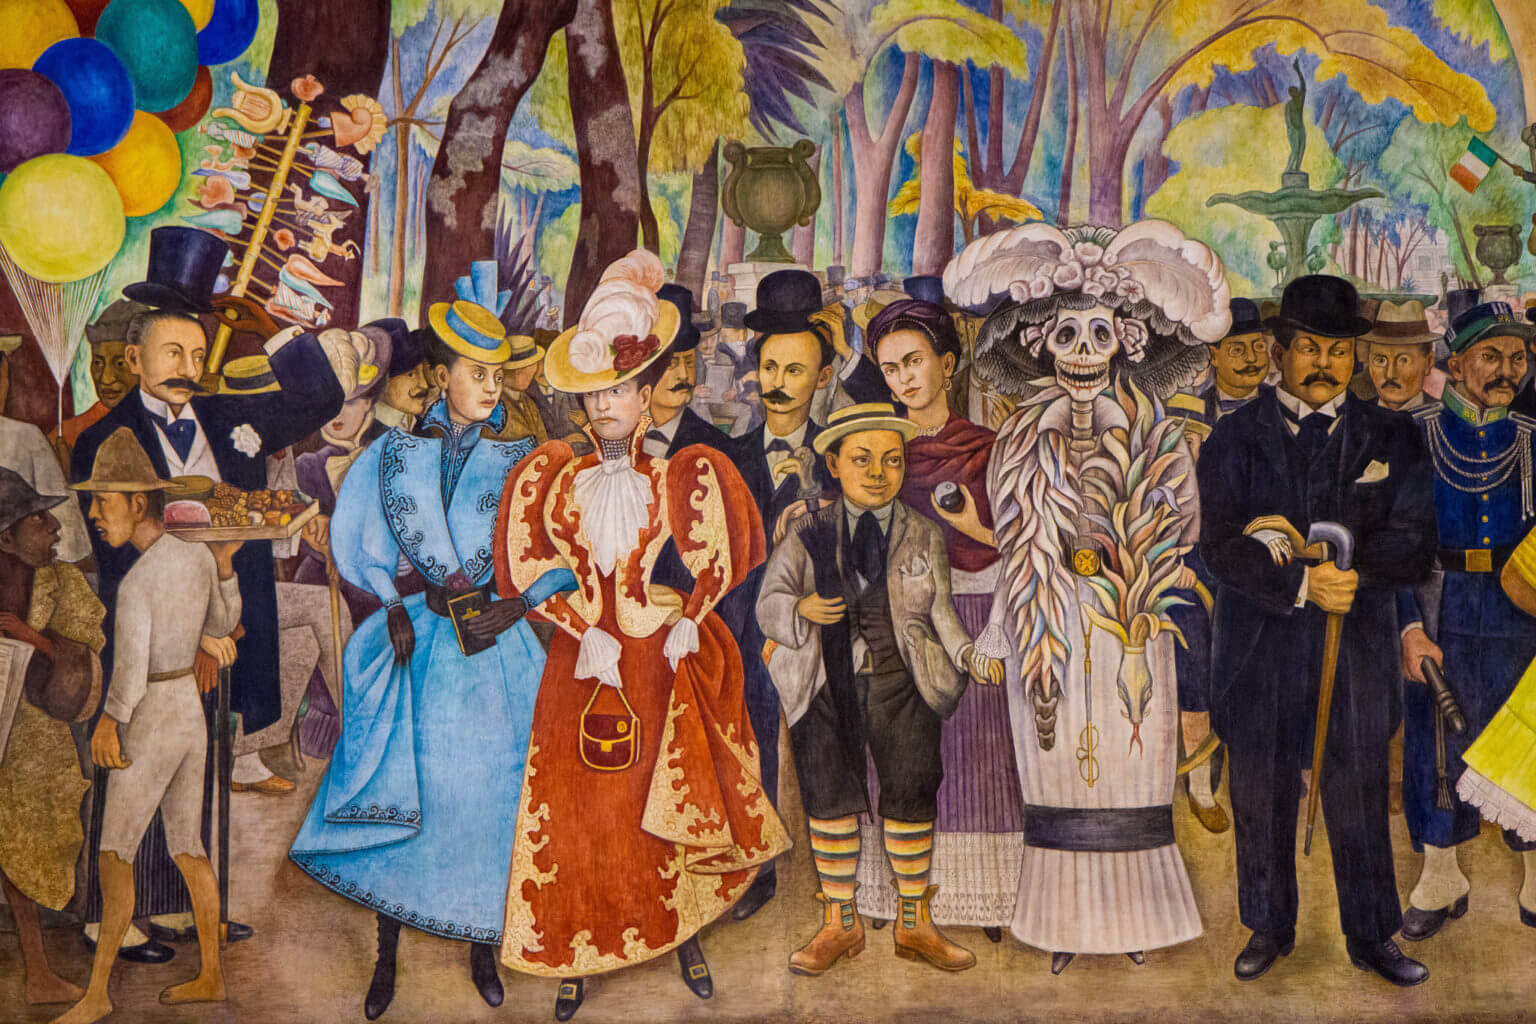 Mural by Diago Rivera features La Calavera Catrina, Diago Rivera as a boy, and his wife Frida Kahlo.